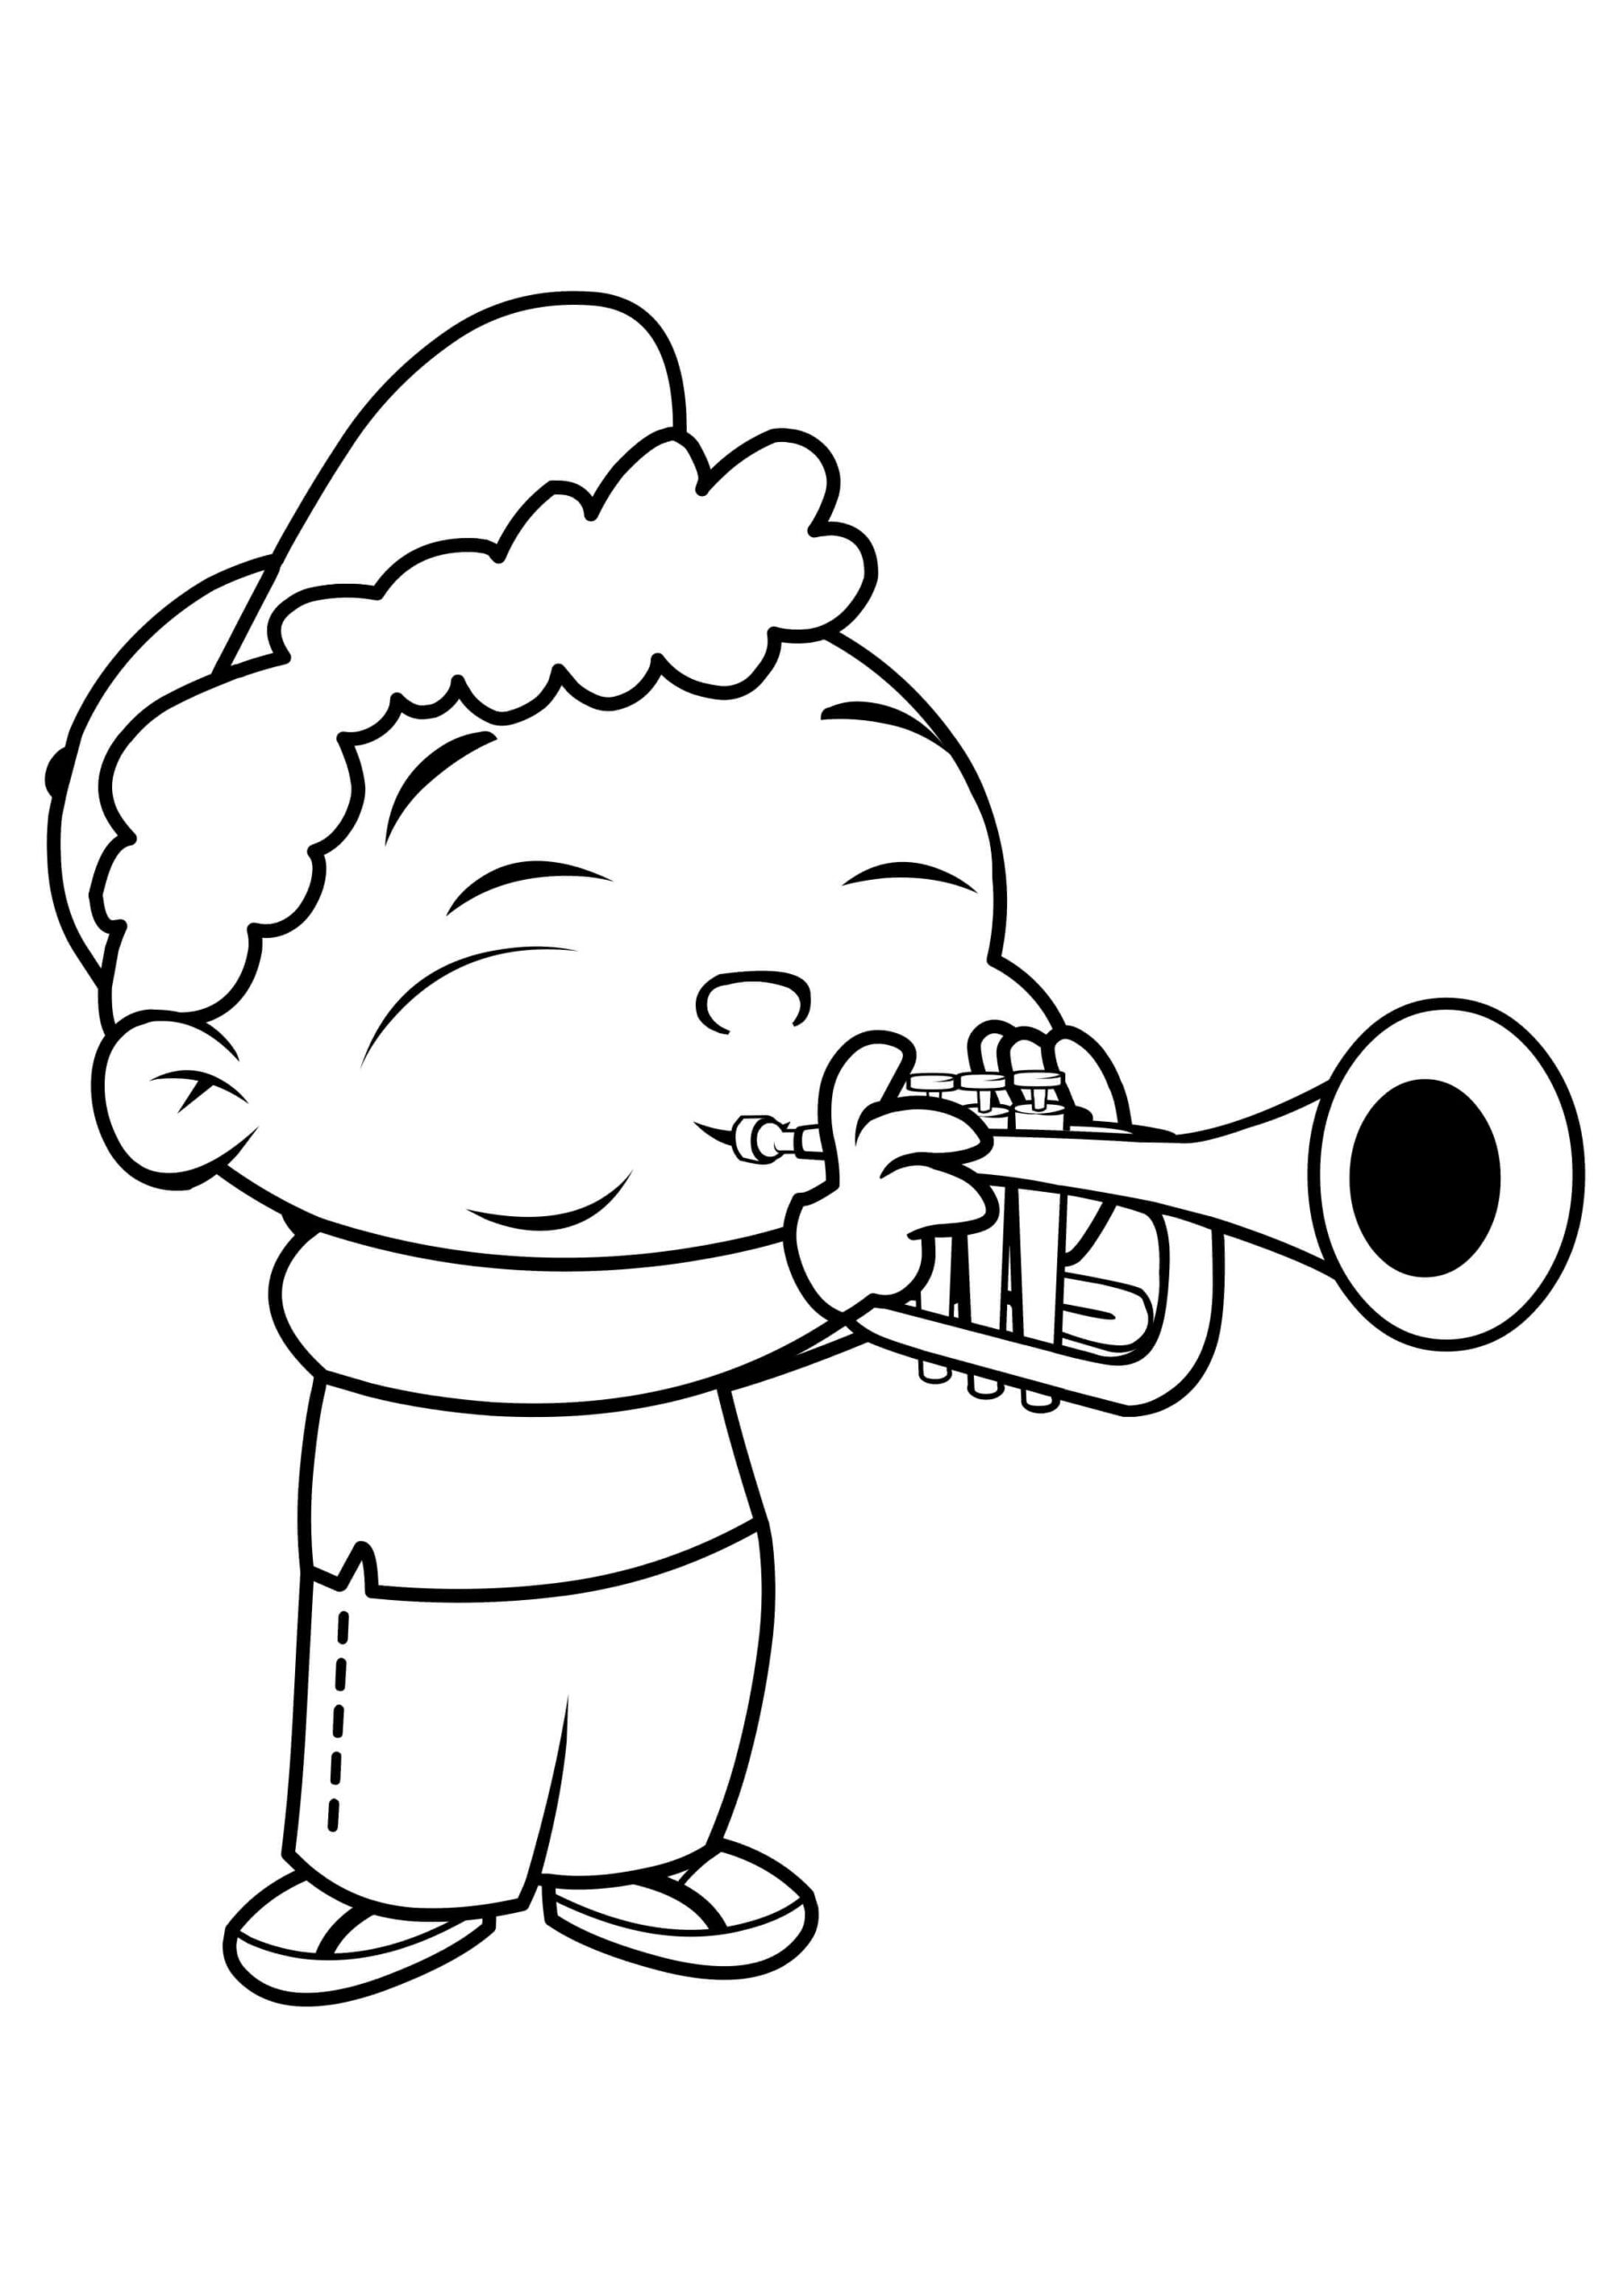 Quincy speelt trompet